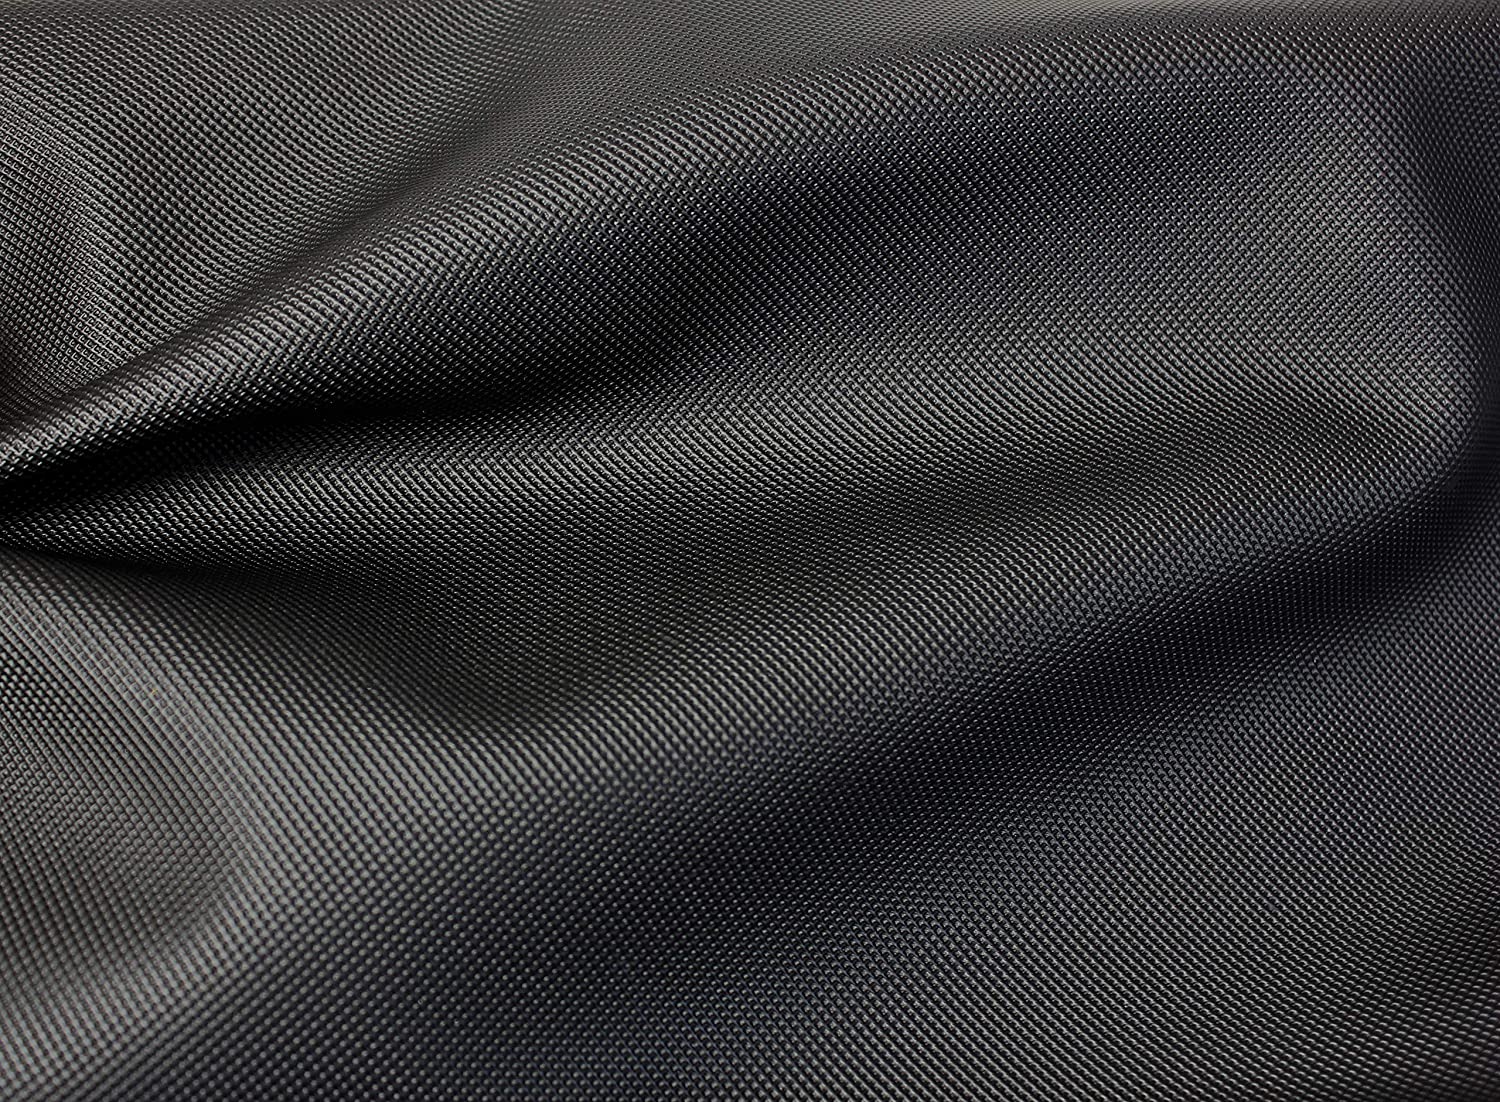 Bycast65 Black Mesh Pattern Faux Leather Marine Vinyl Fabric - The VViViD Vinyl Wrap Shop